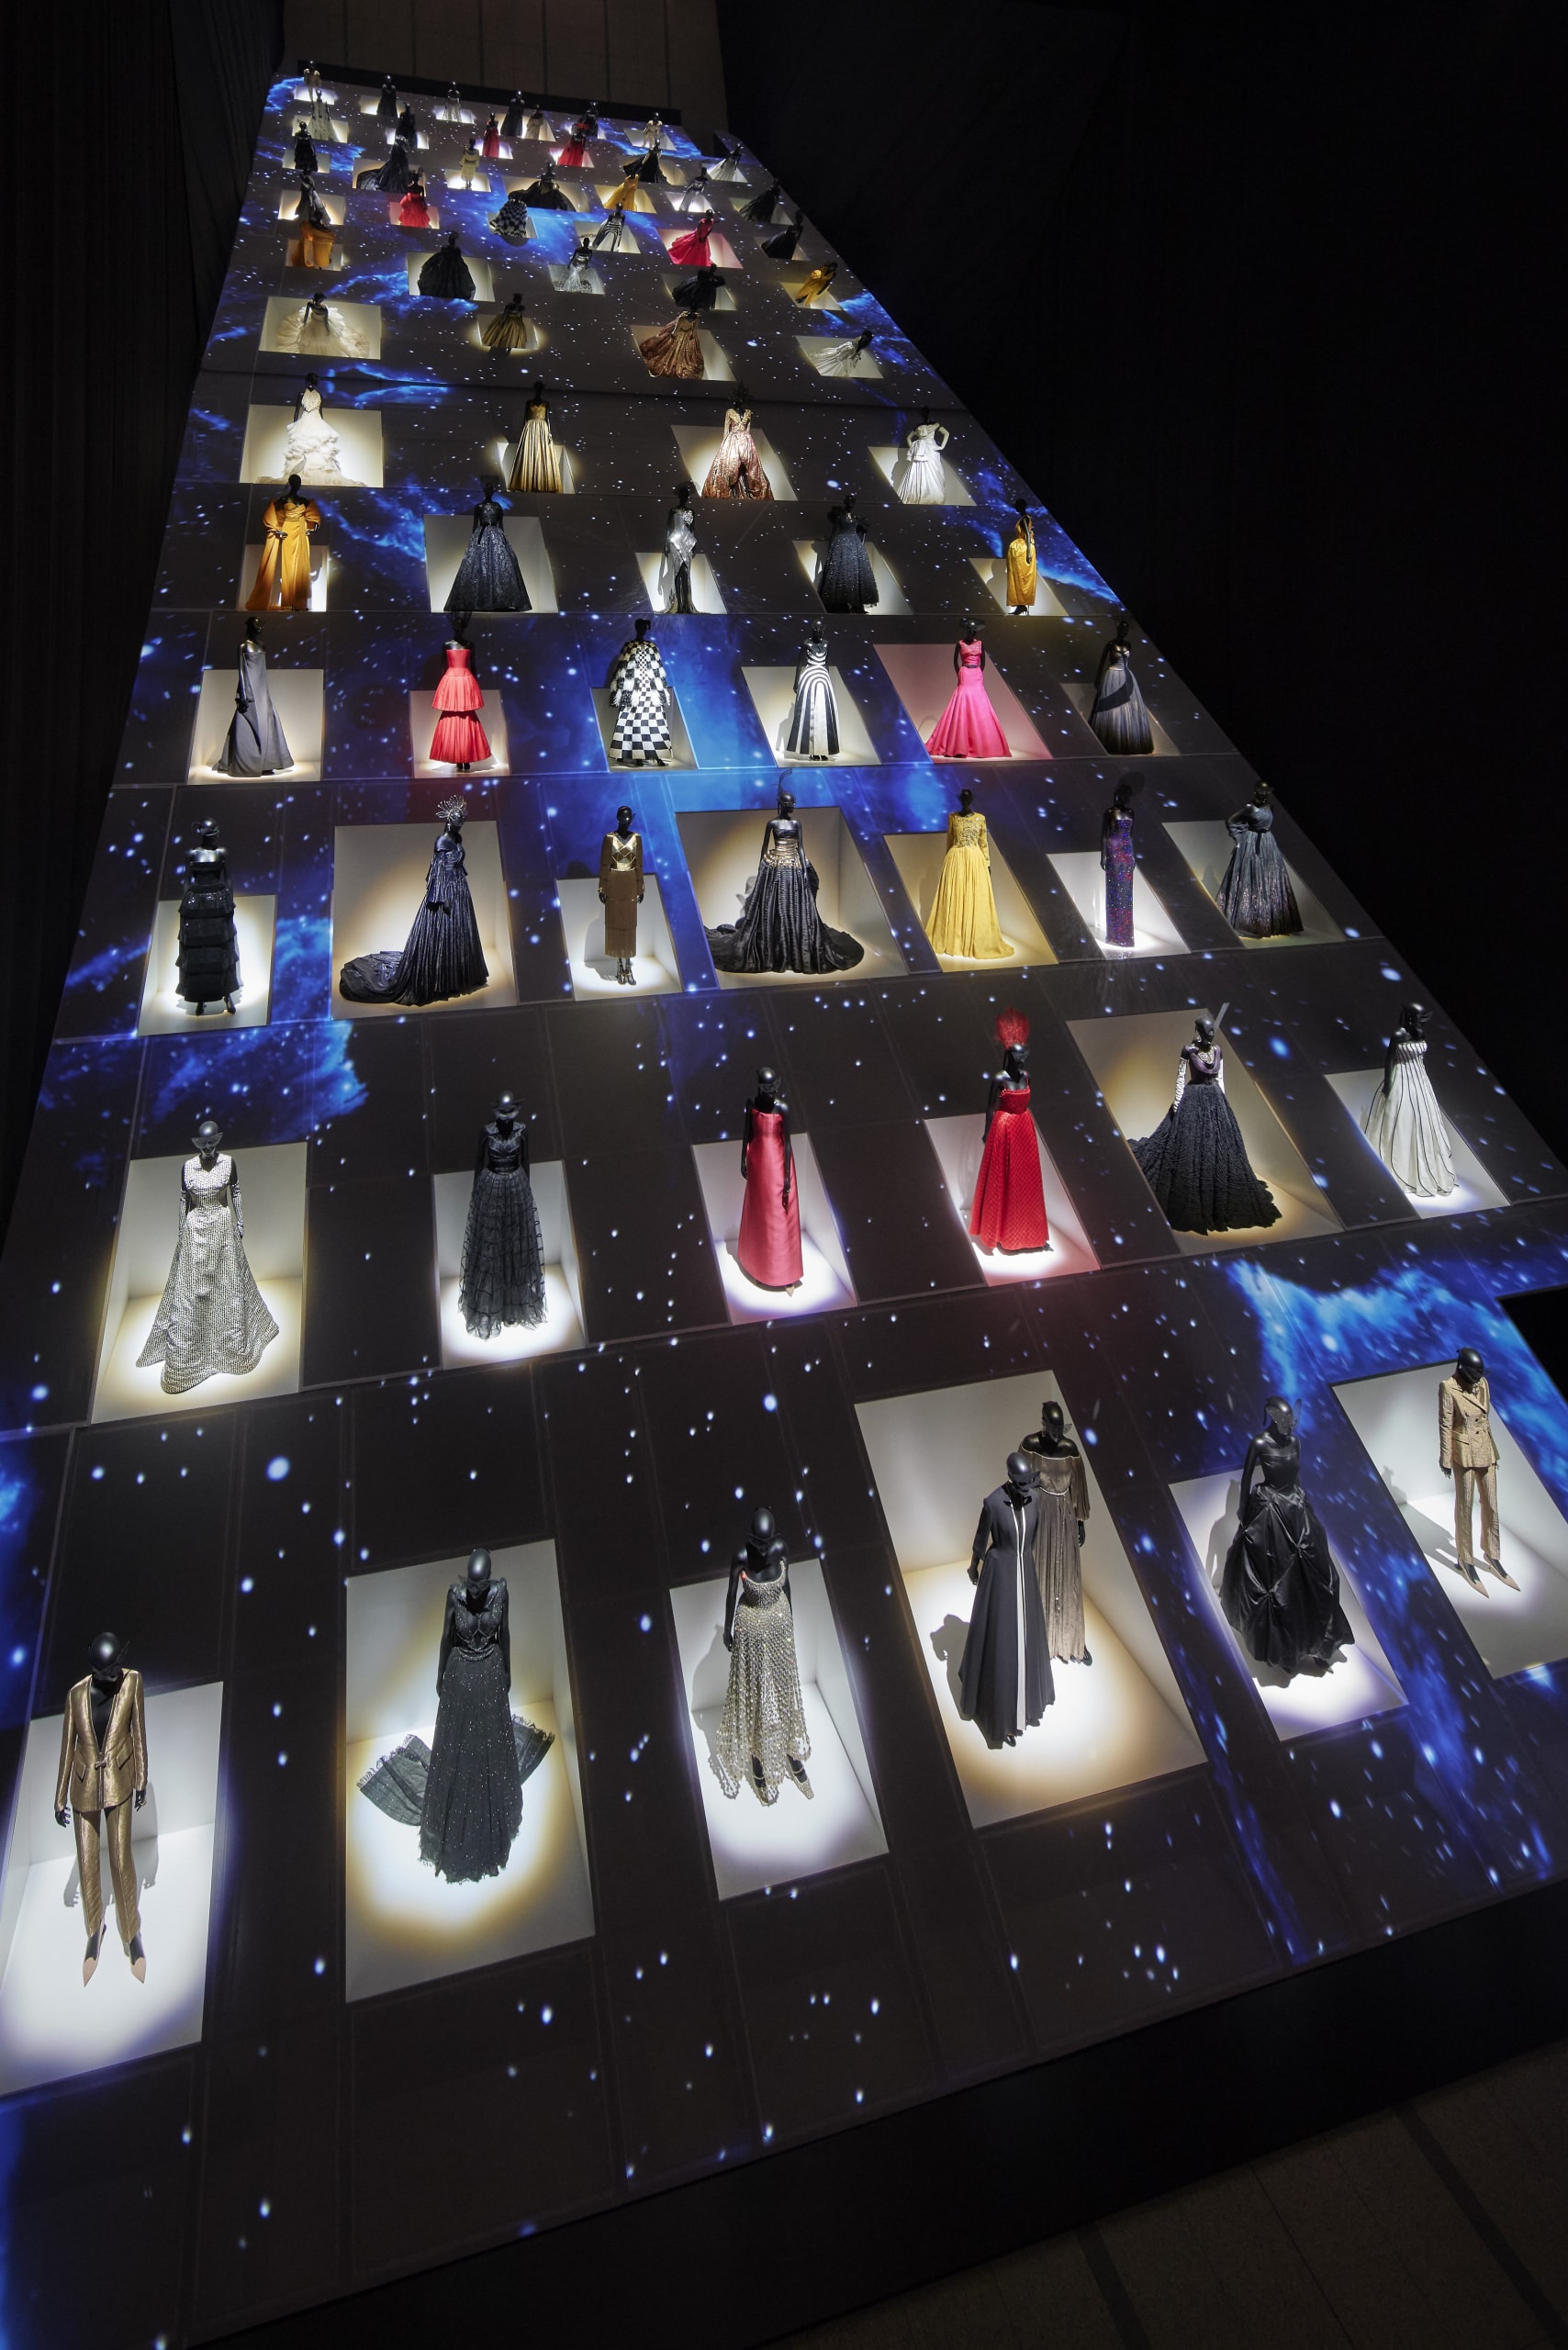 《Christian Dior: Designer of Dreams》展覽正式登陸東京都現代美術館